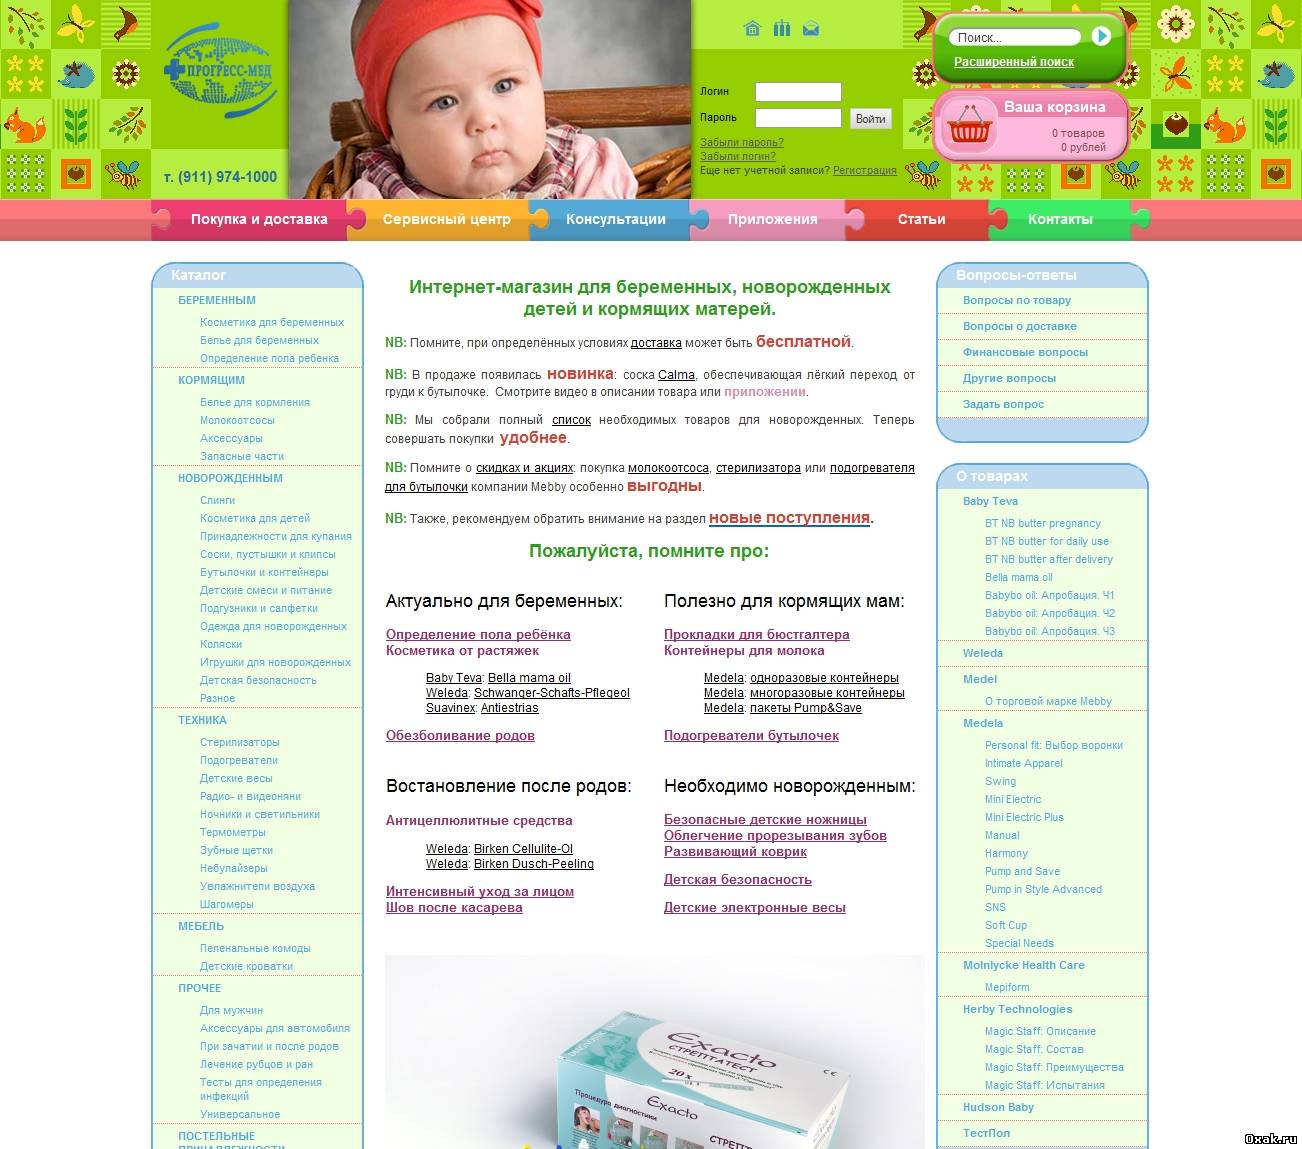 Kidsmax Ru Детский Интернет Магазин